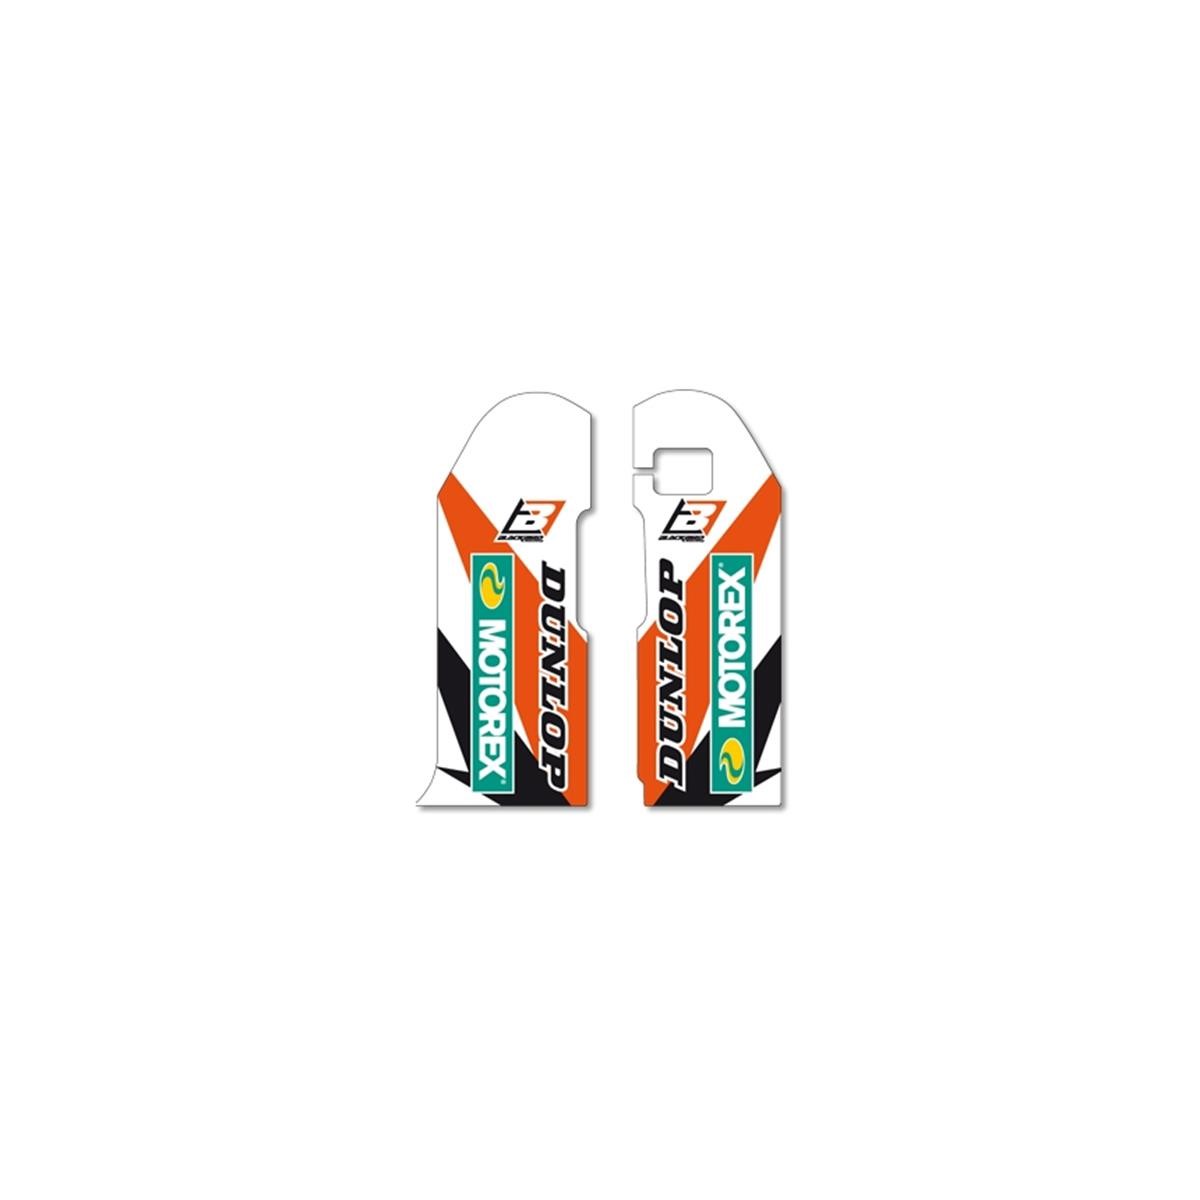 Blackbird Racing Adesivi Copristeli Forcella  KTM SX/SX-F 2015